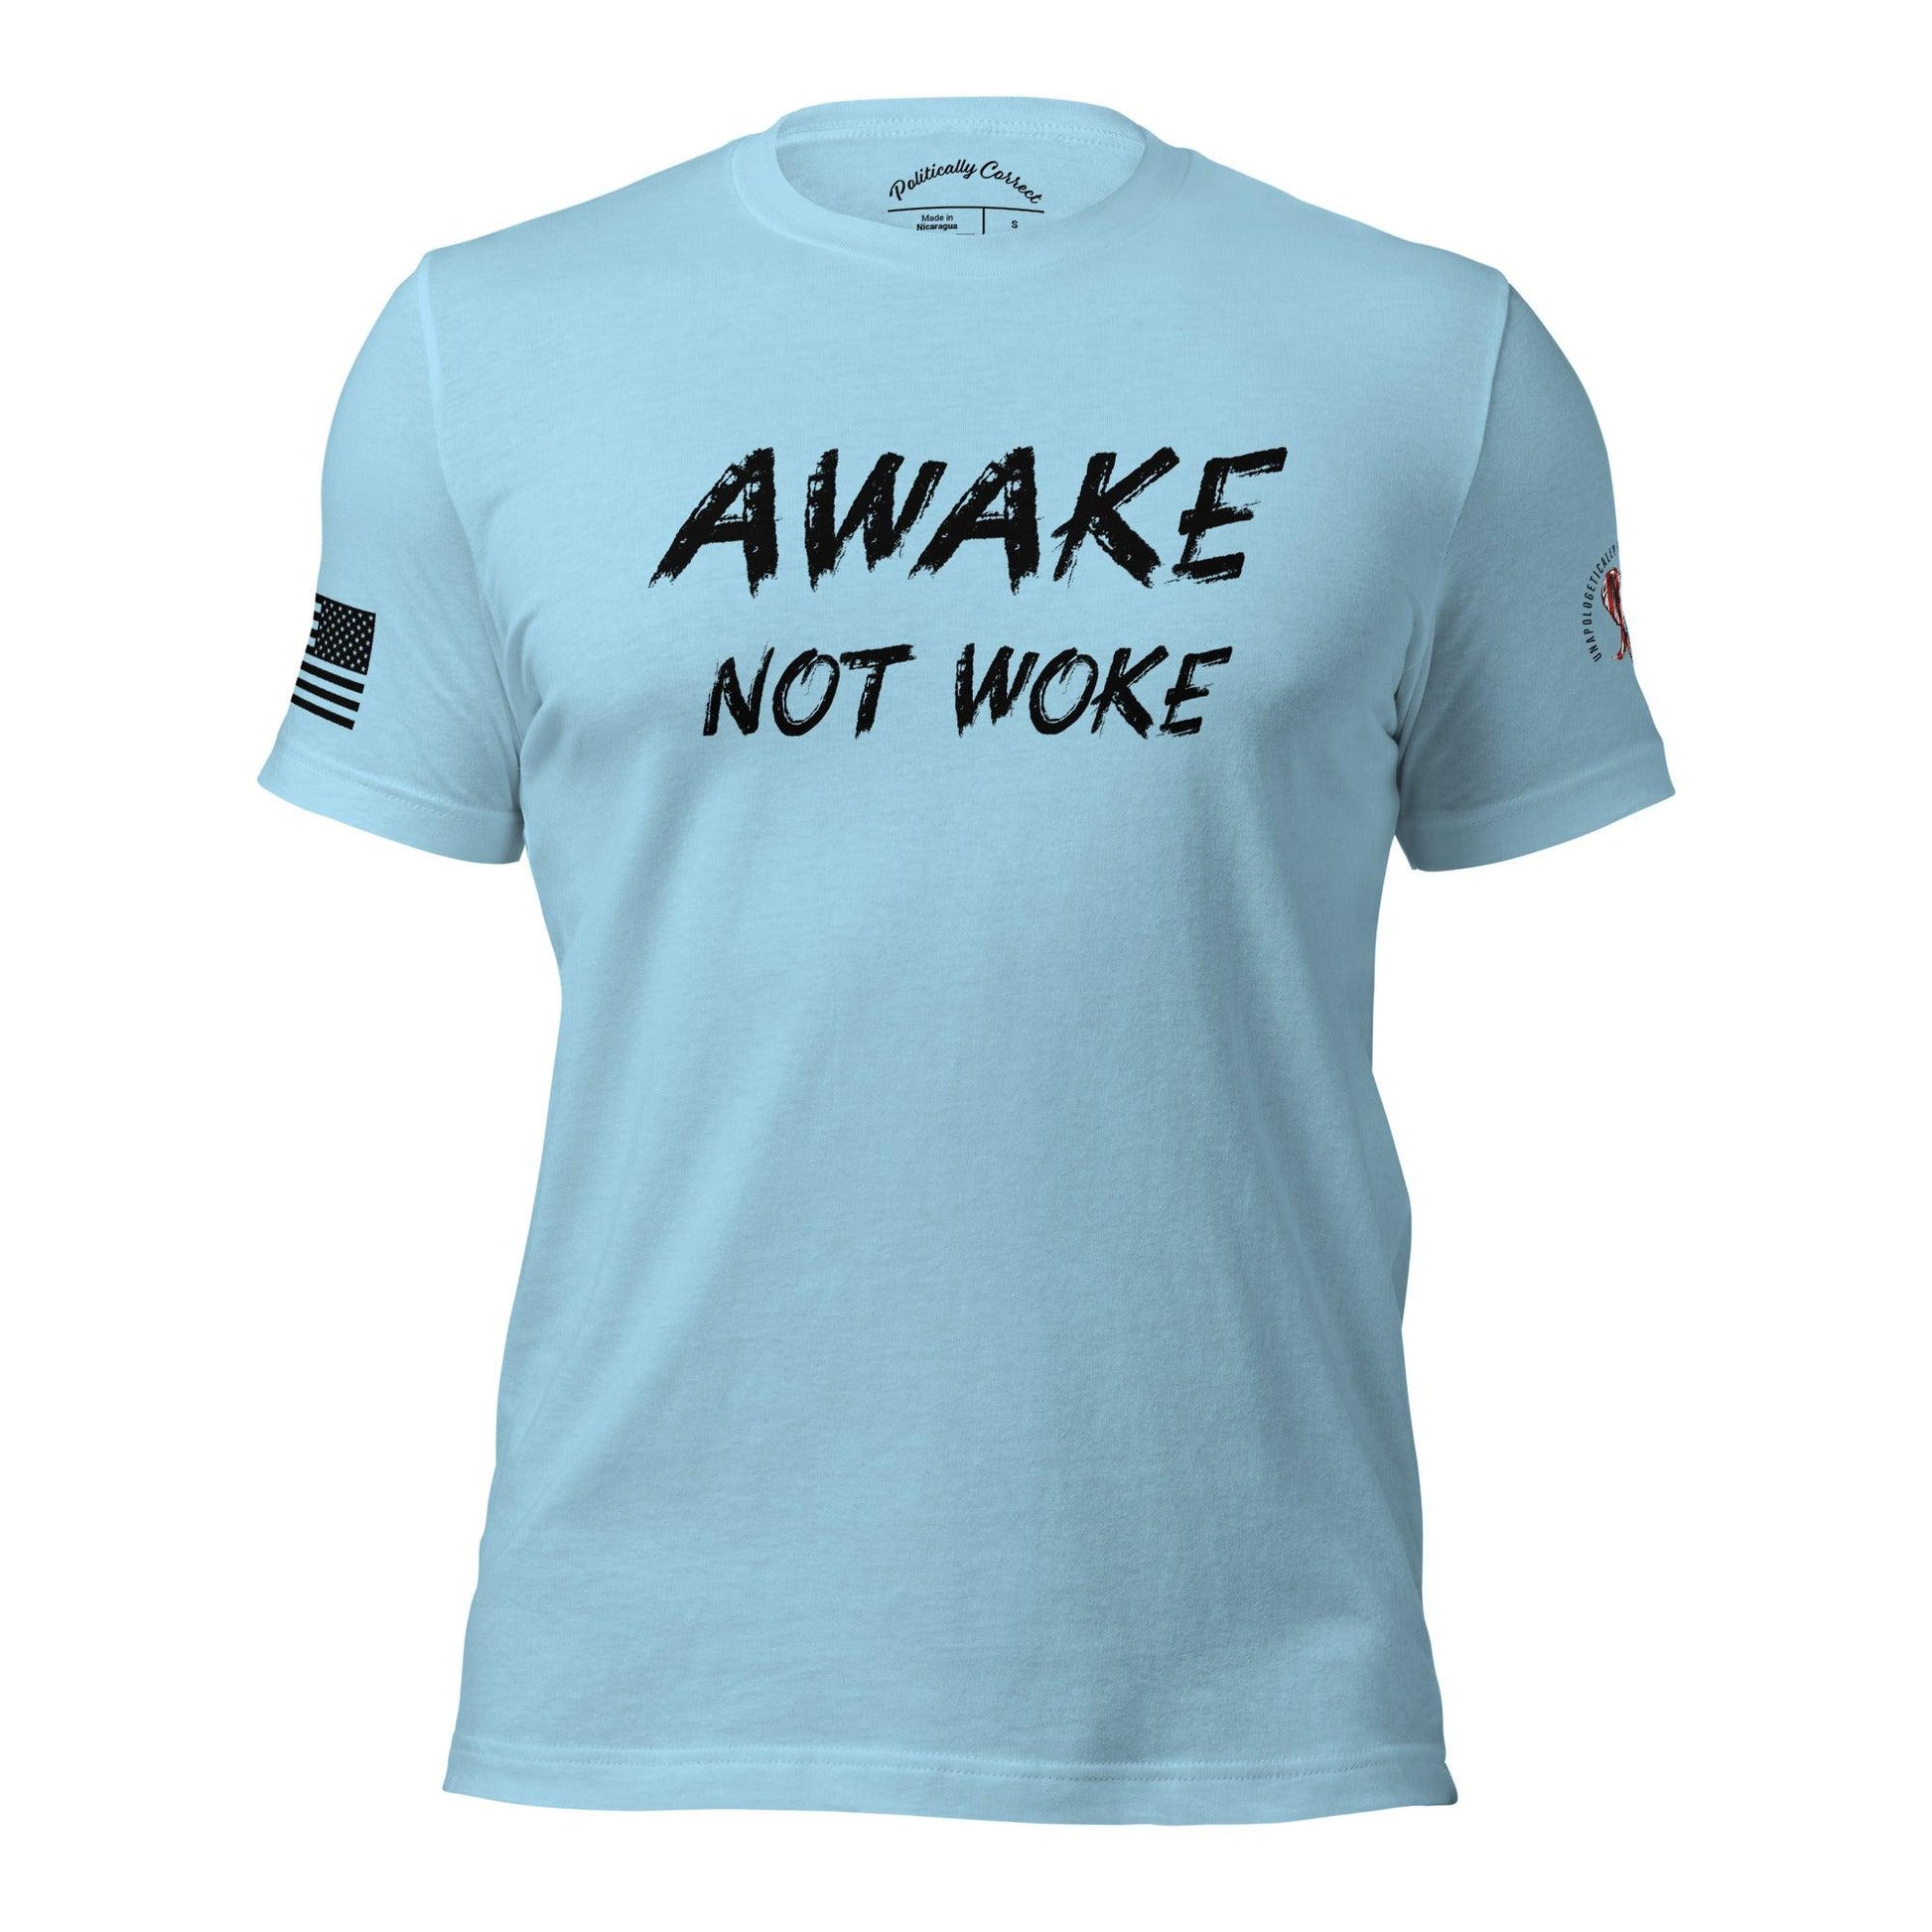 Awake not woke - Bright - Politically Correct